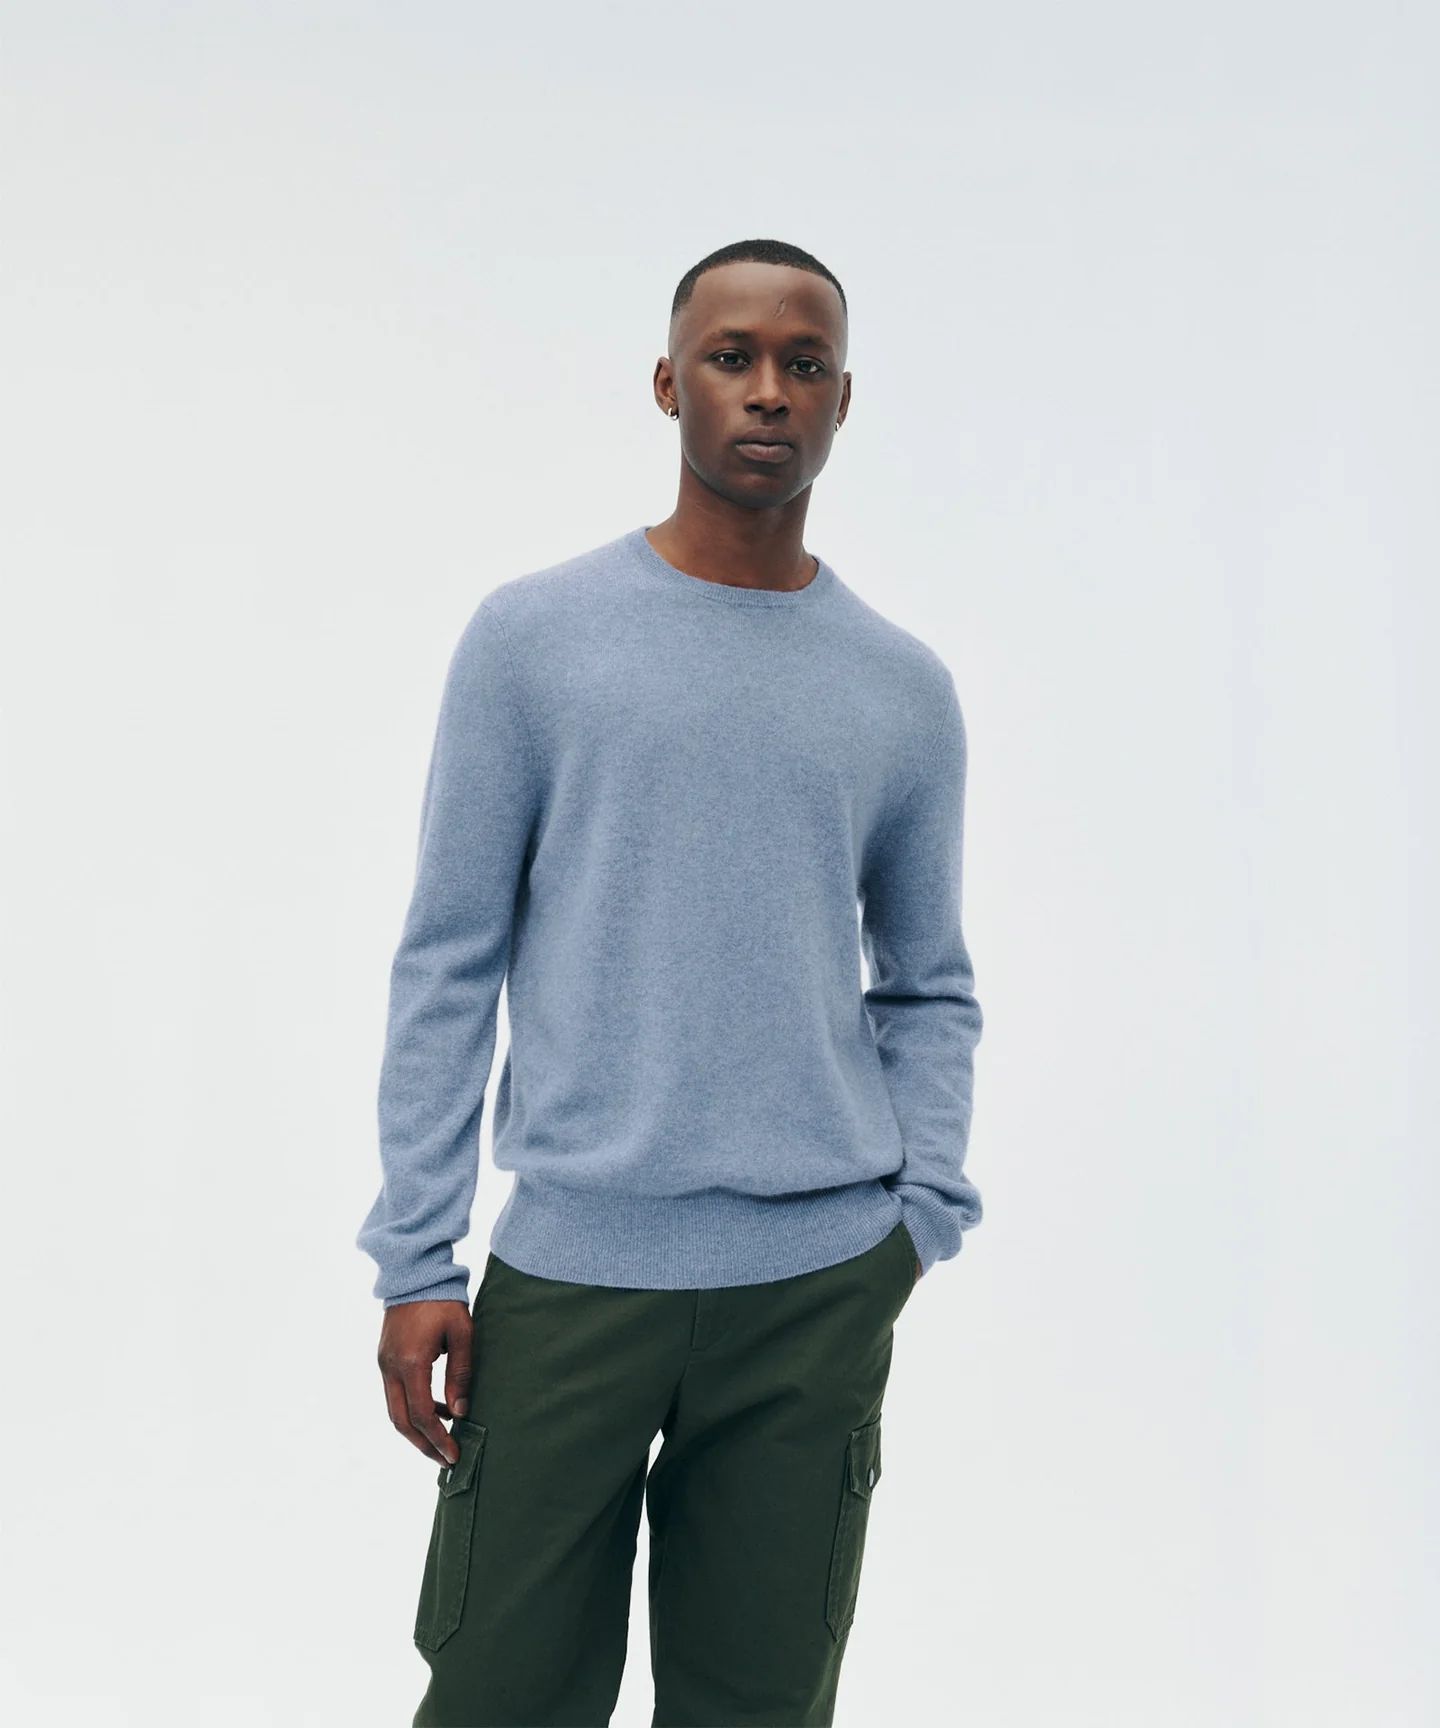 The Essential $75 Cashmere Sweater | NAADAM